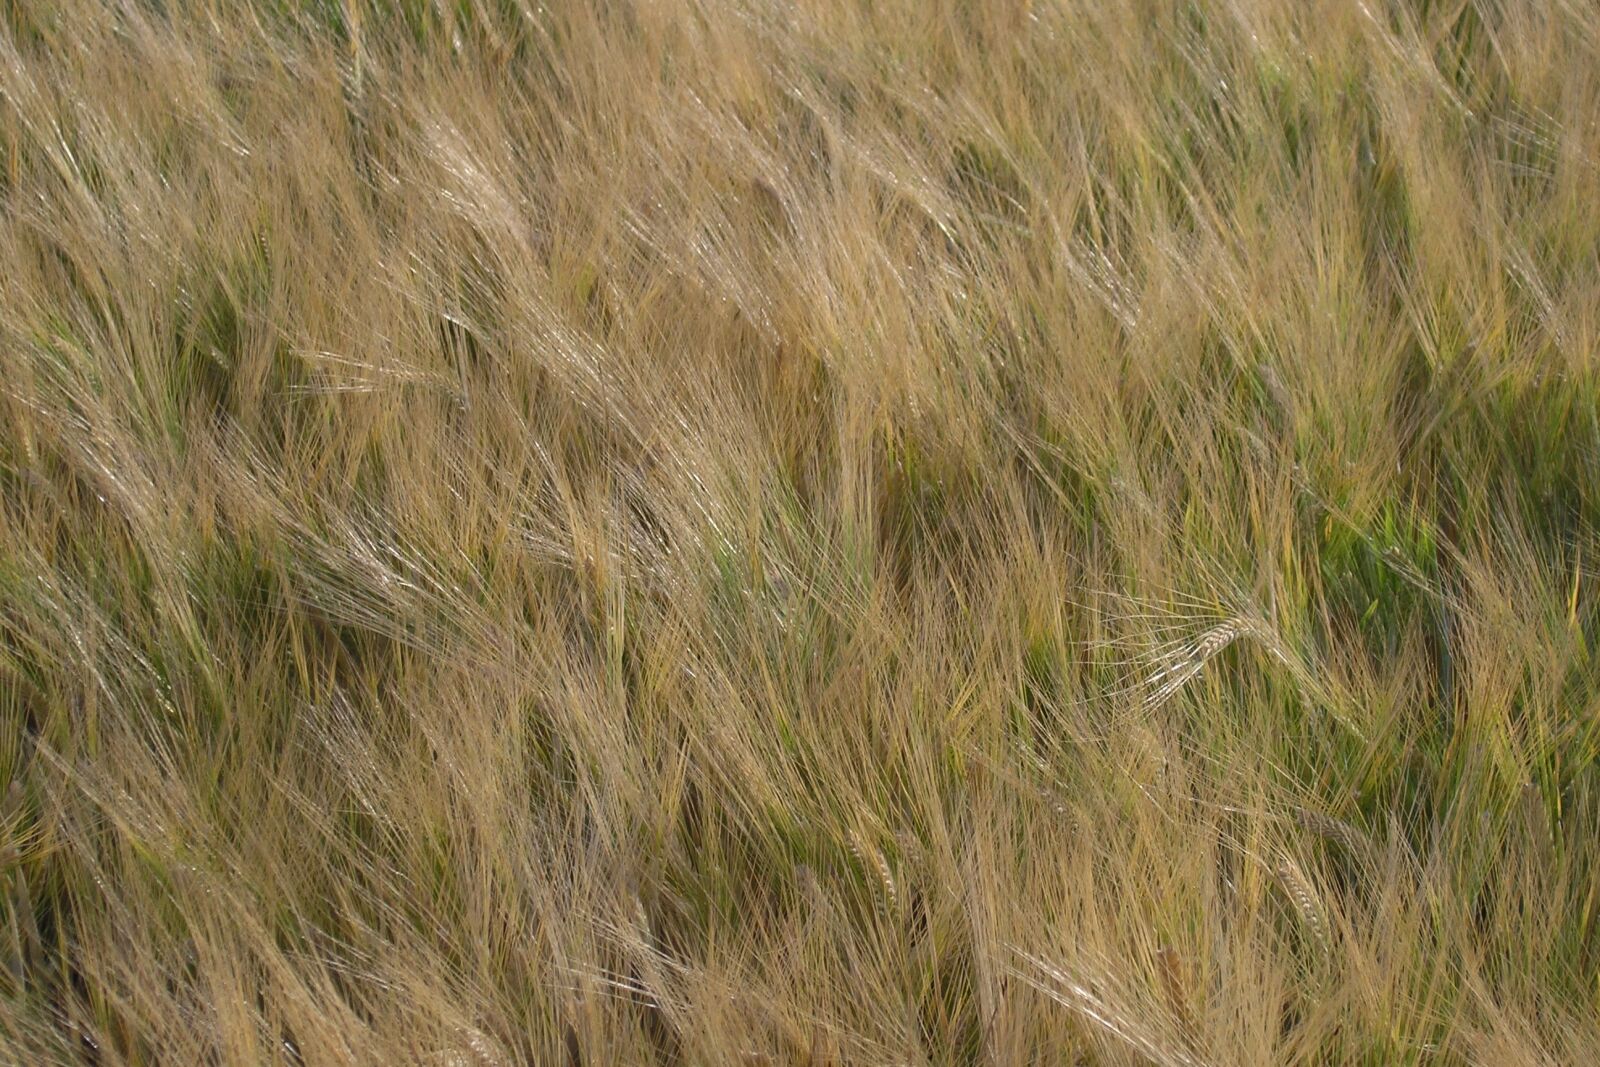 Olympus C5060WZ sample photo. Nature, wheat, field photography